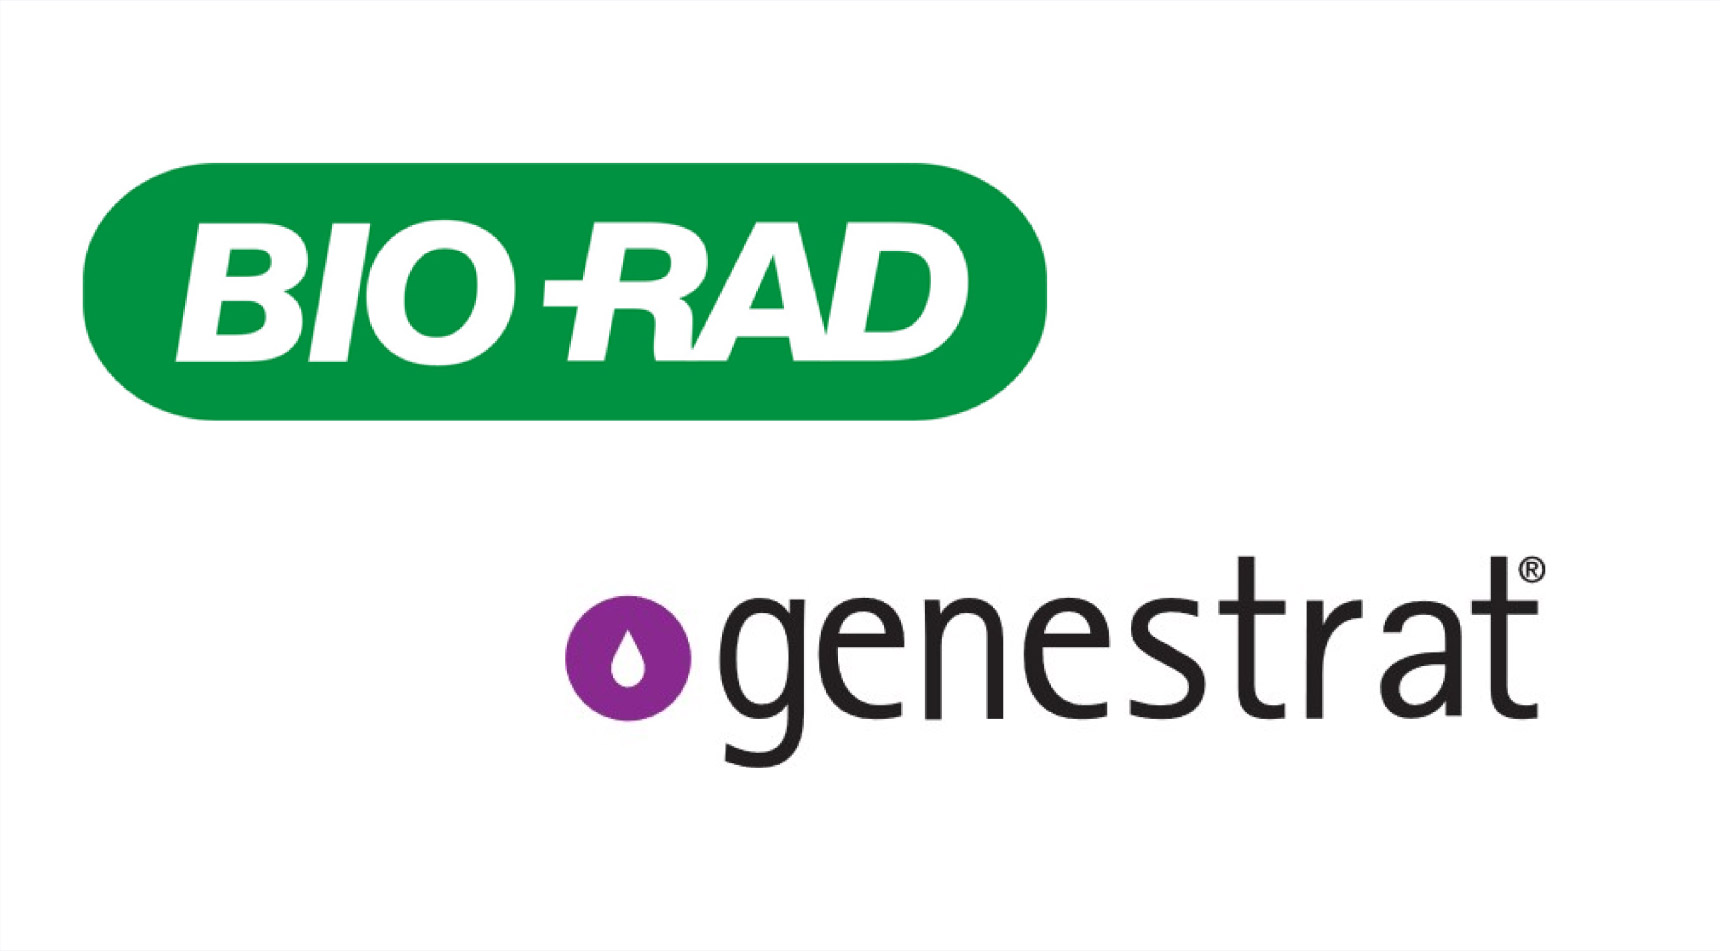 bio rad and genestrat logos